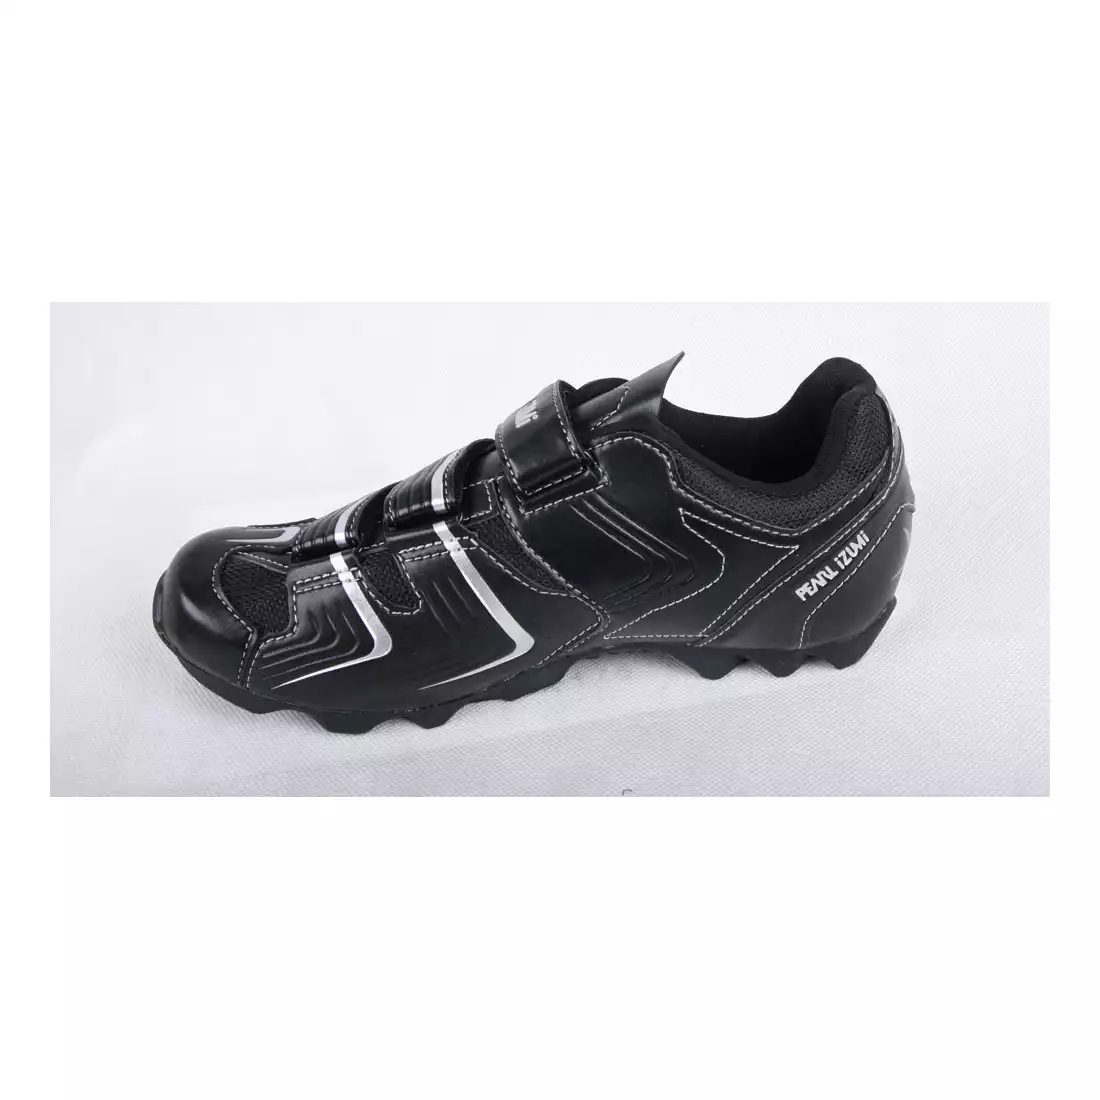 Pearl iZUMi All-Road Men's Cycling Shoe 15111001 Black/Black 